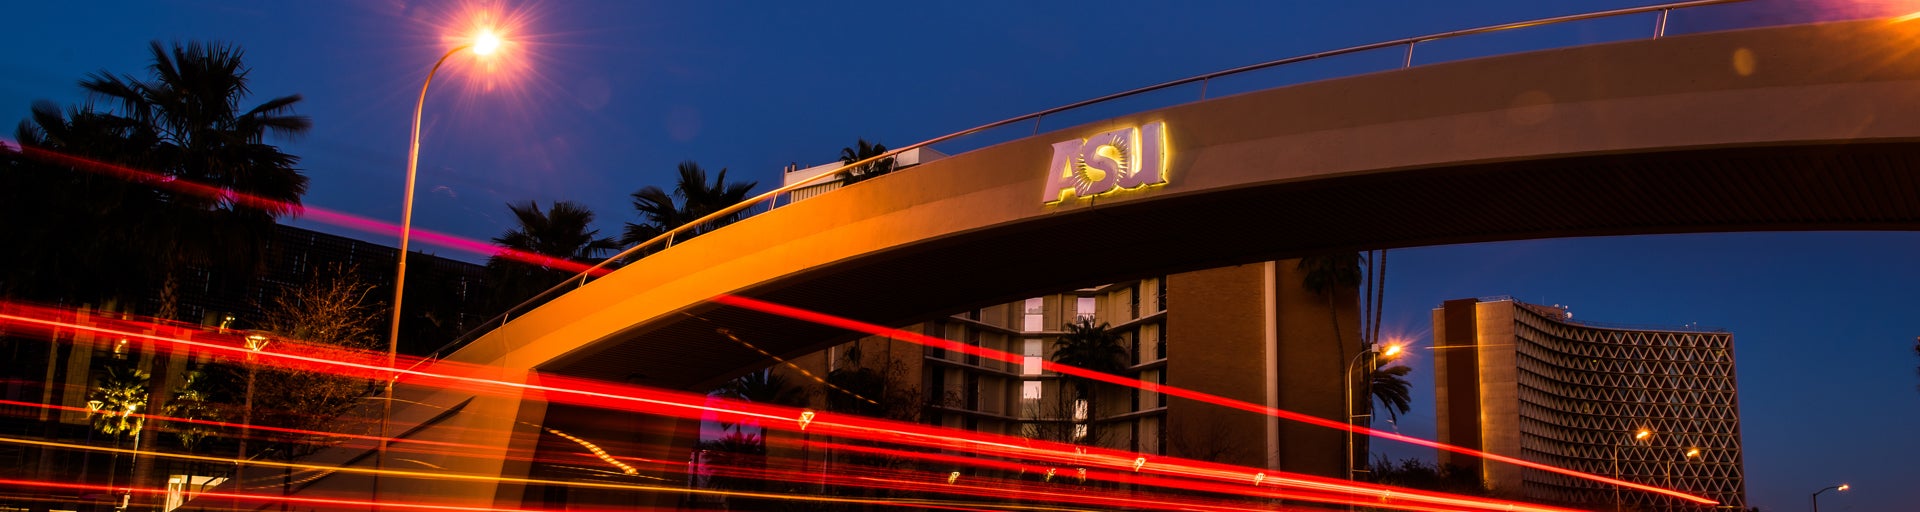 A bridge displaying the ASU logo at dusk